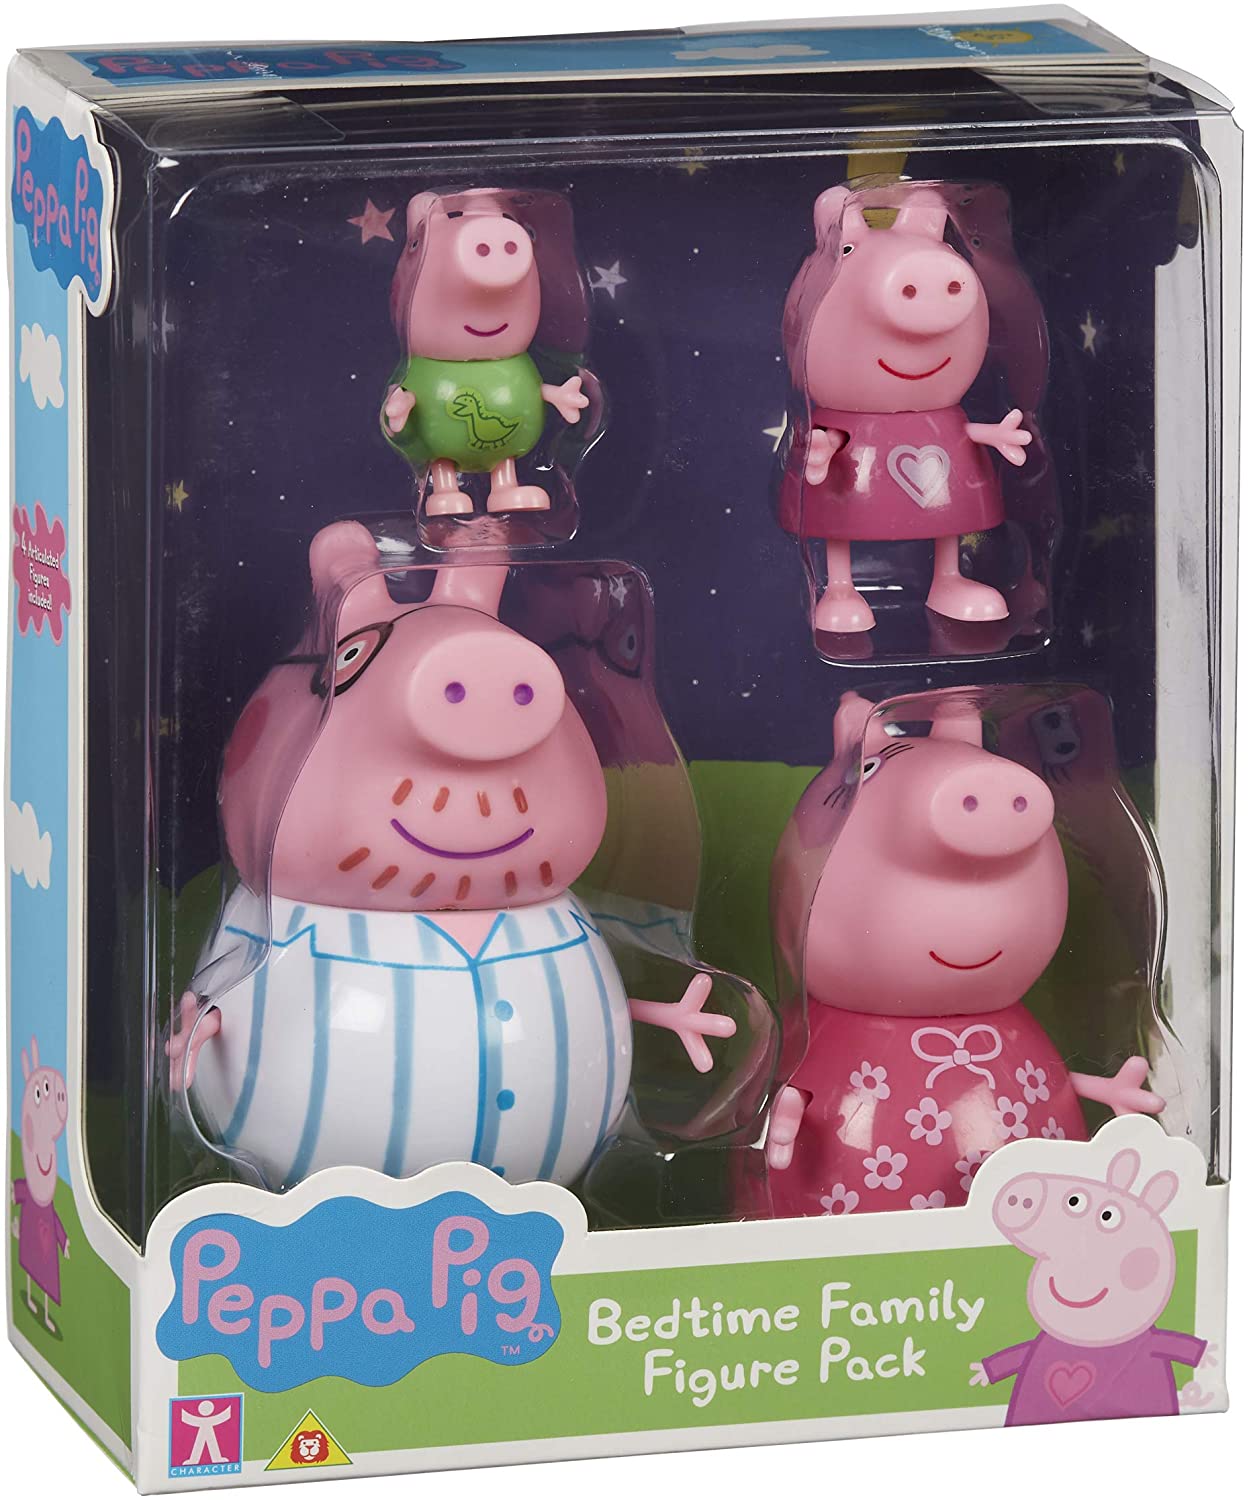 Peppa Pig Pack Figuras Familia de Vacaciones